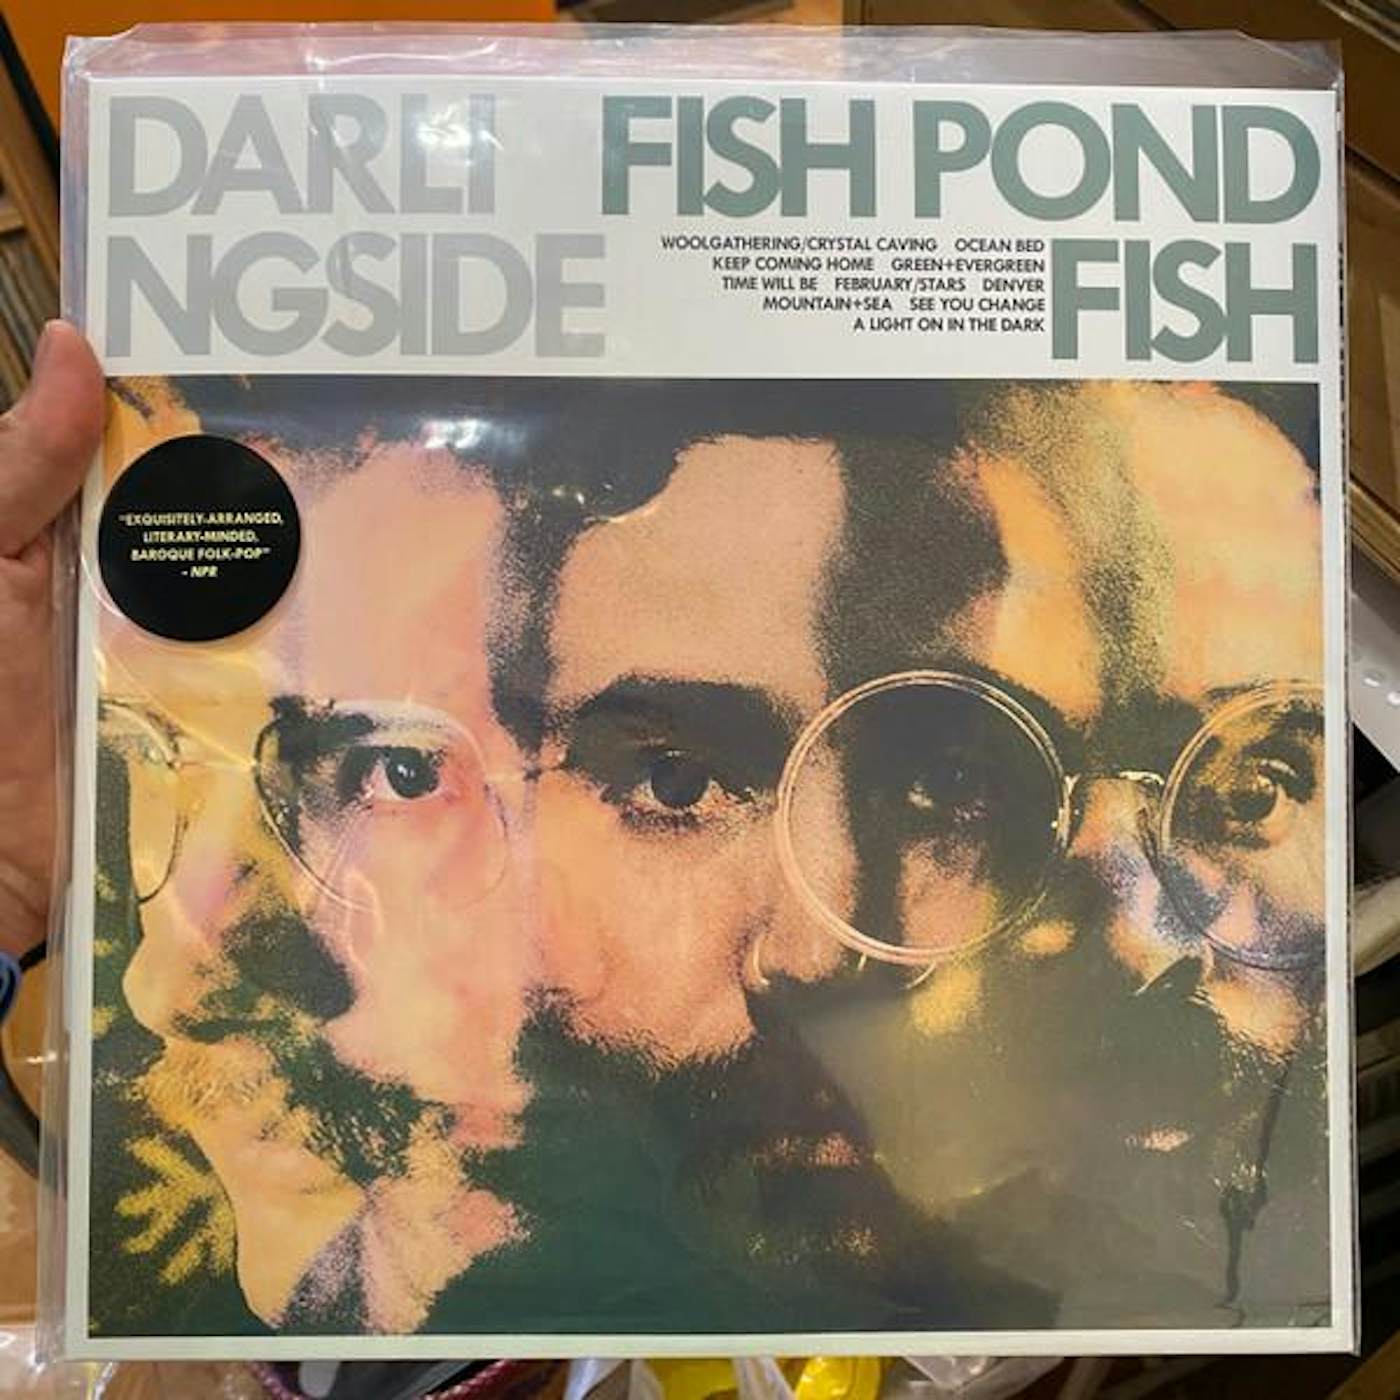 Darlingside FISH POND FISH Vinyl Record - Limited Edition